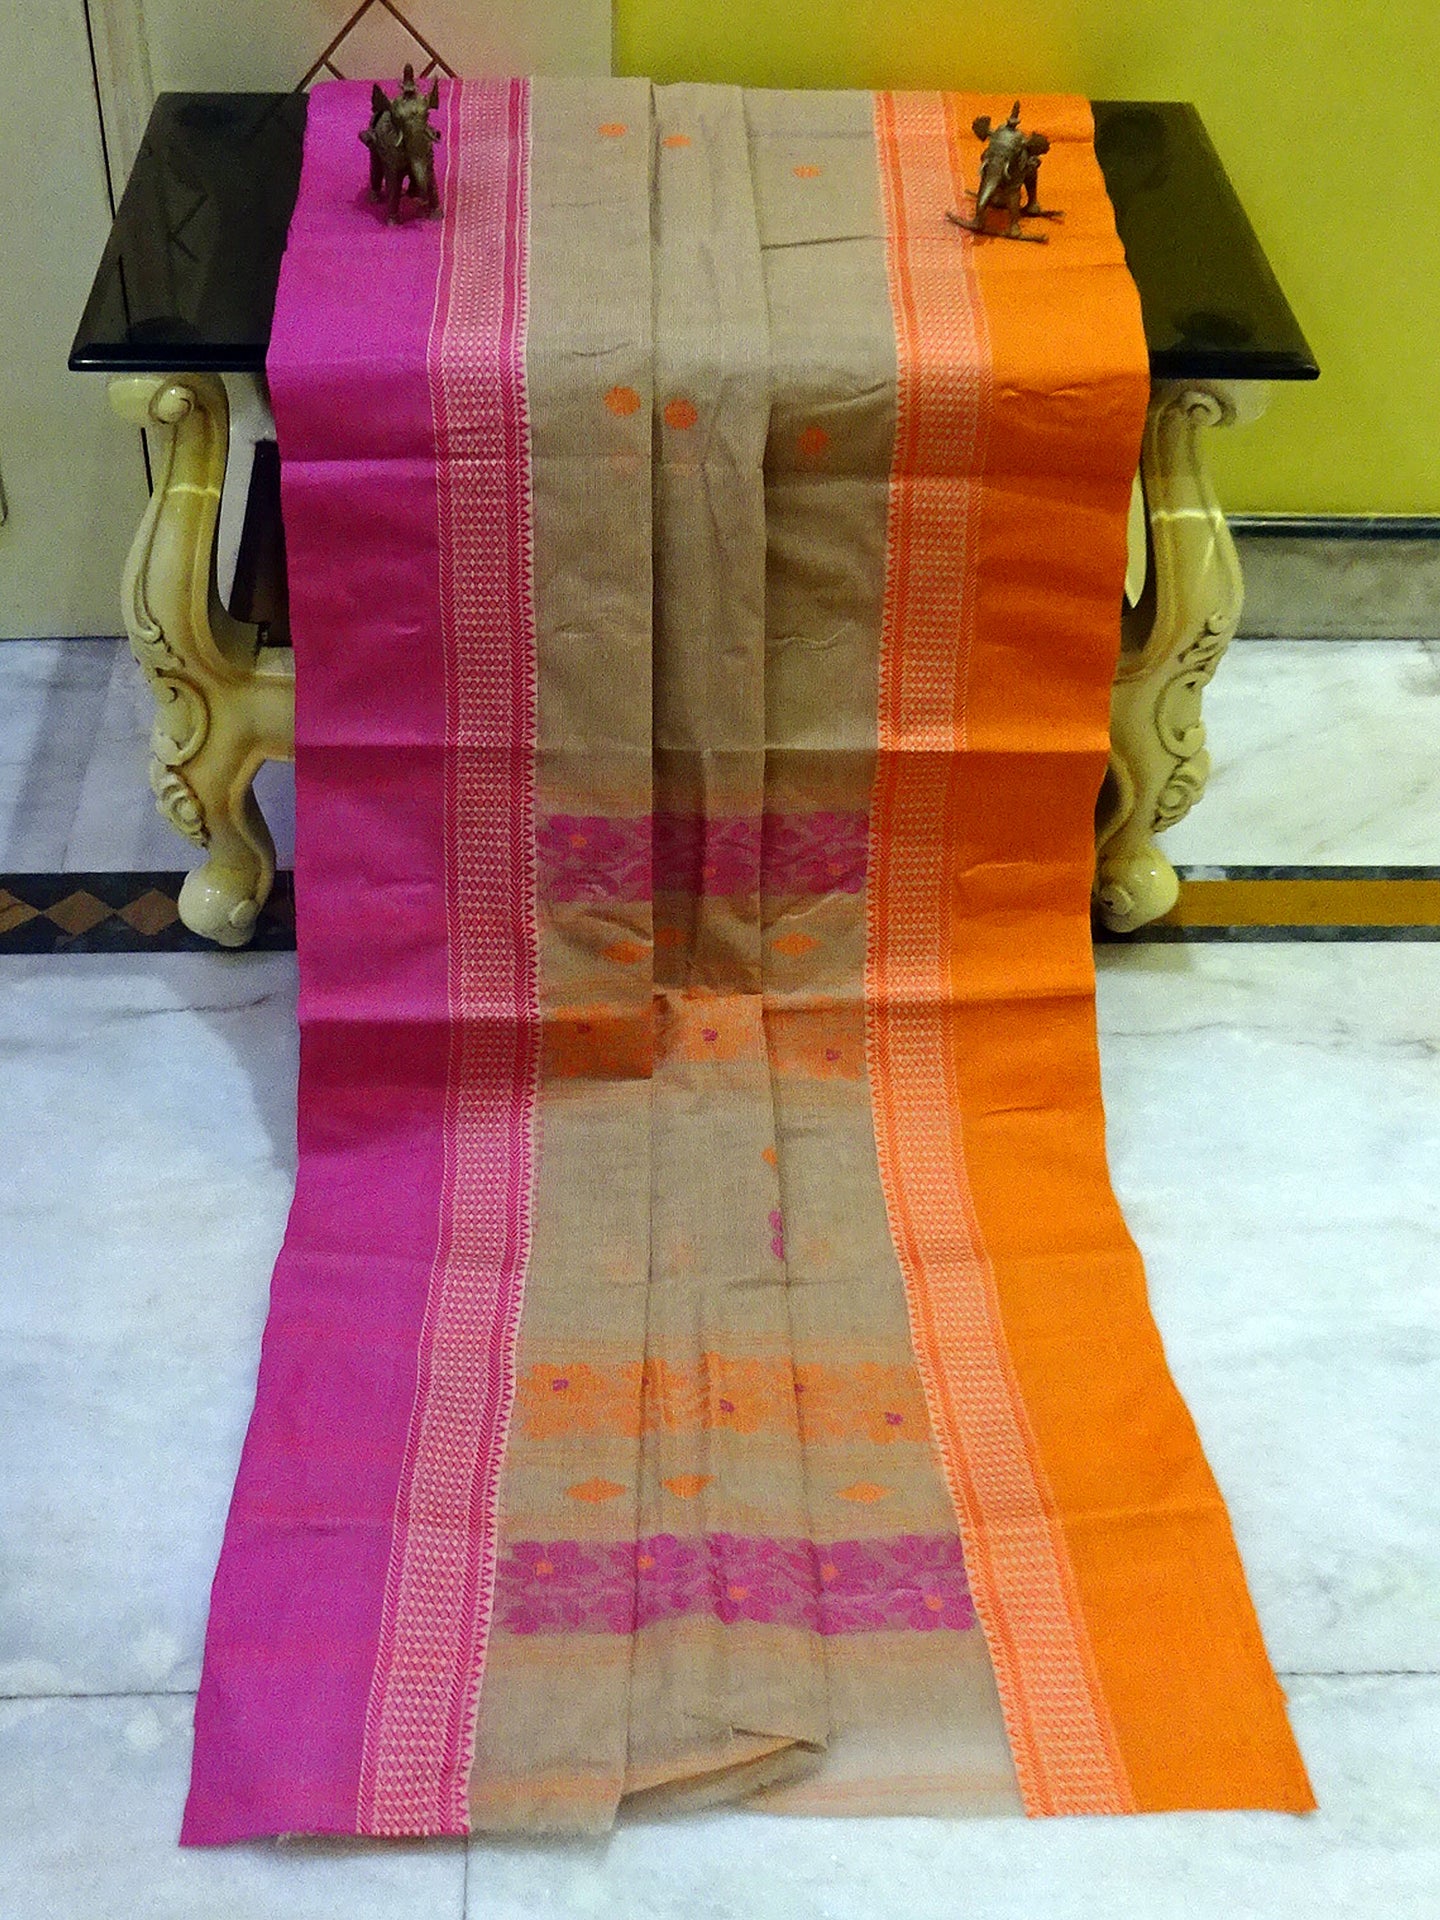 Woven Matta Nakshi Ganga Jamuna Border Premium Quality Bengal Handloom Cotton Saree in Tan Brown, Lilac Pink and Diffuse Orange